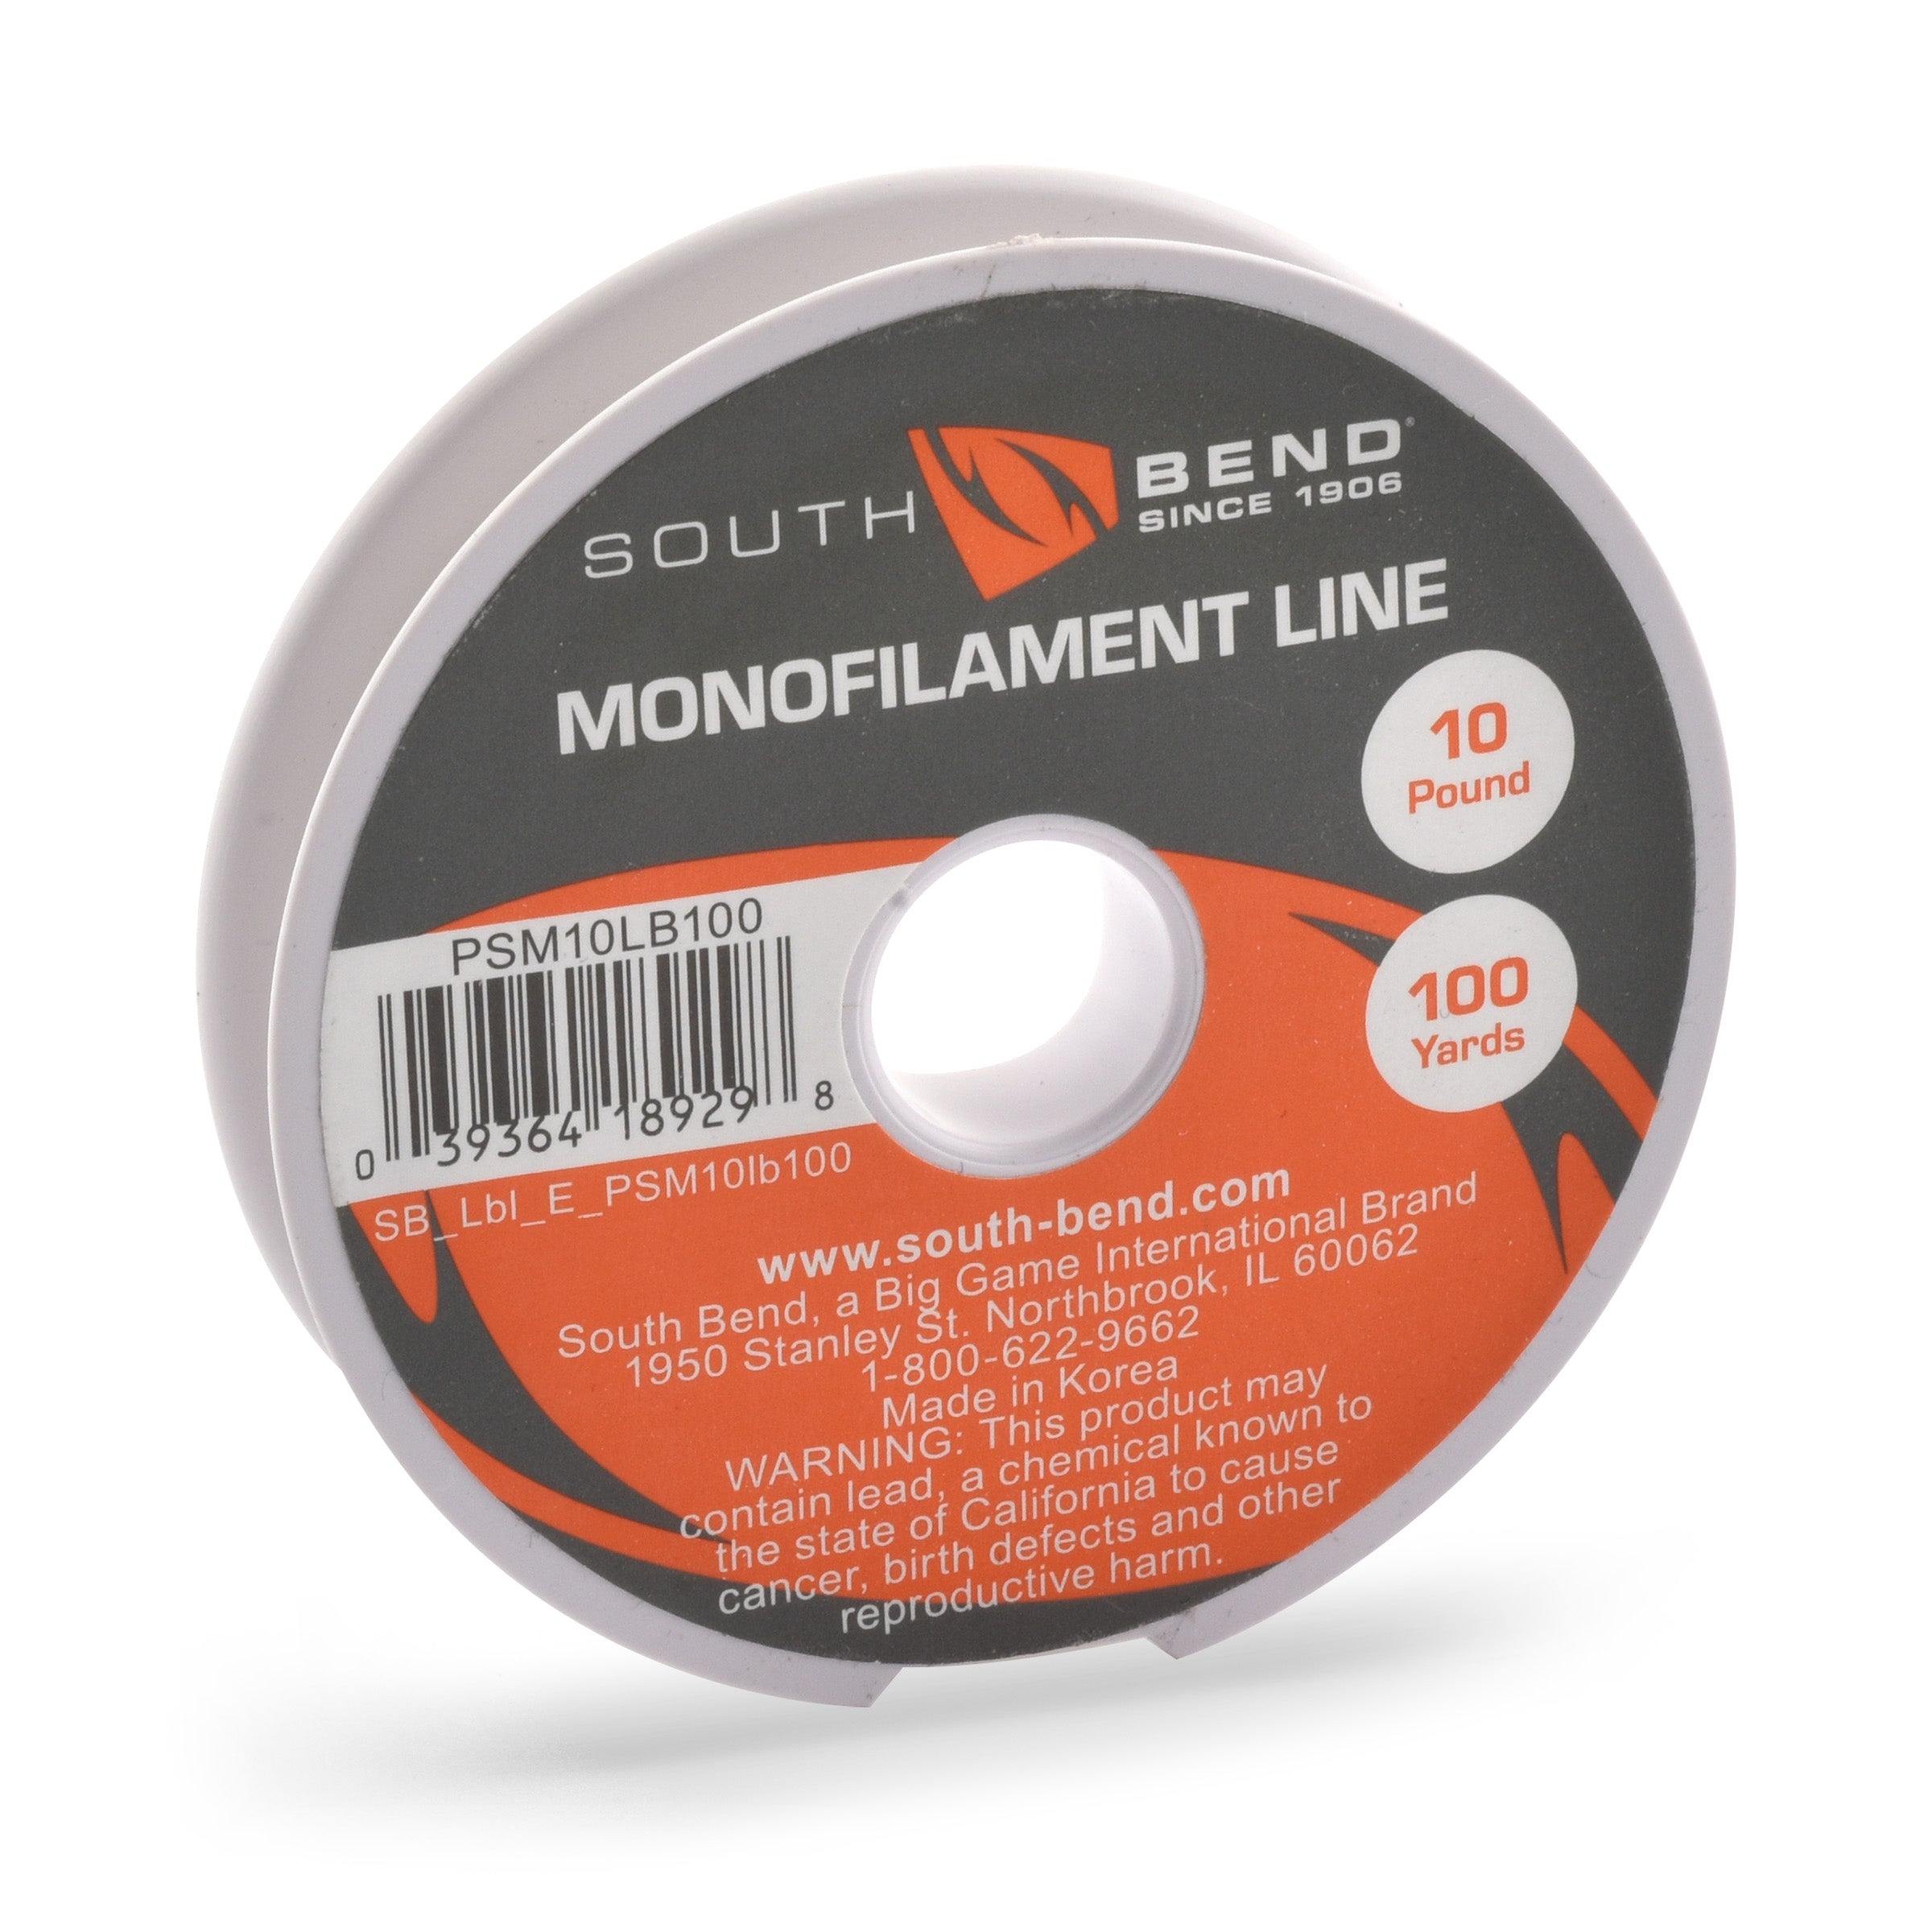 South Bend monofilament fishing line 10 lb test